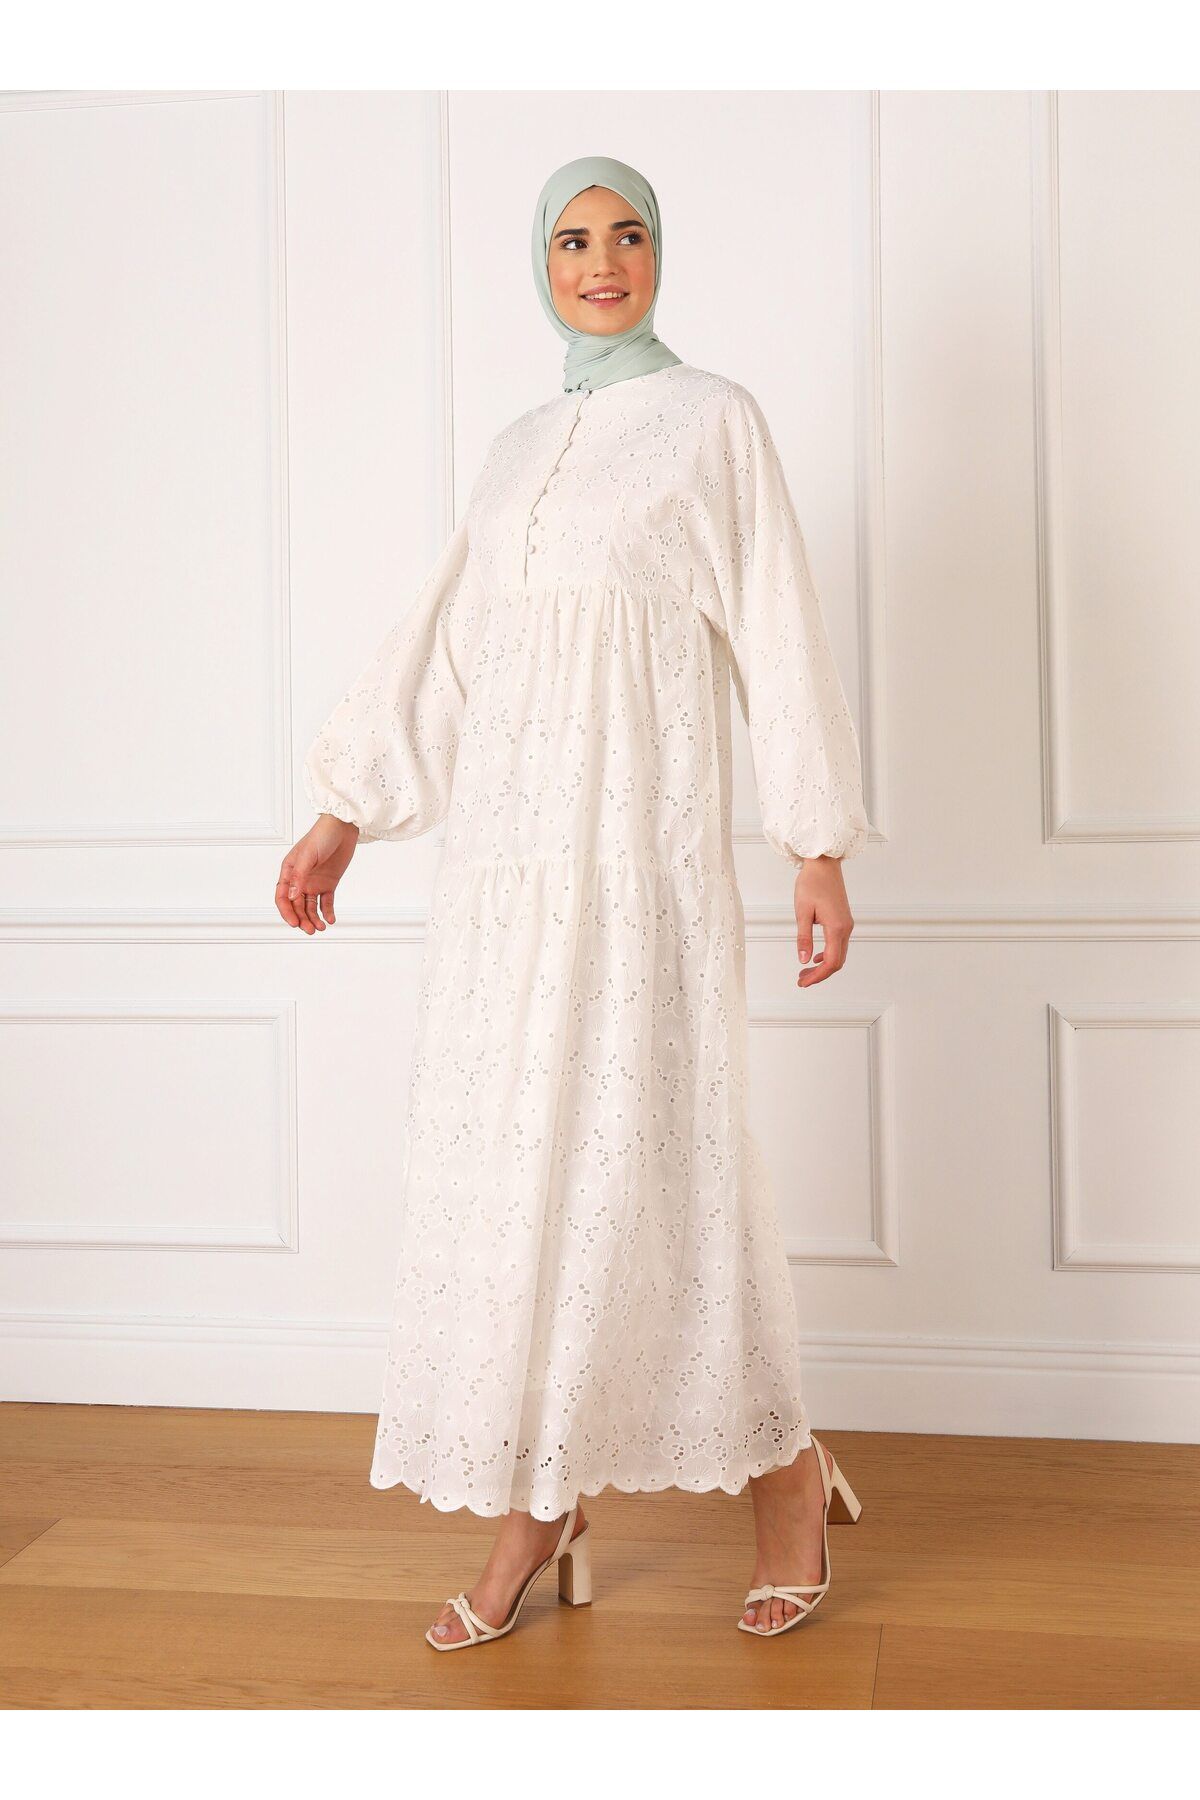 Refka Brit Detaylı Fisto Tesettür Elbise - Off White - Refka